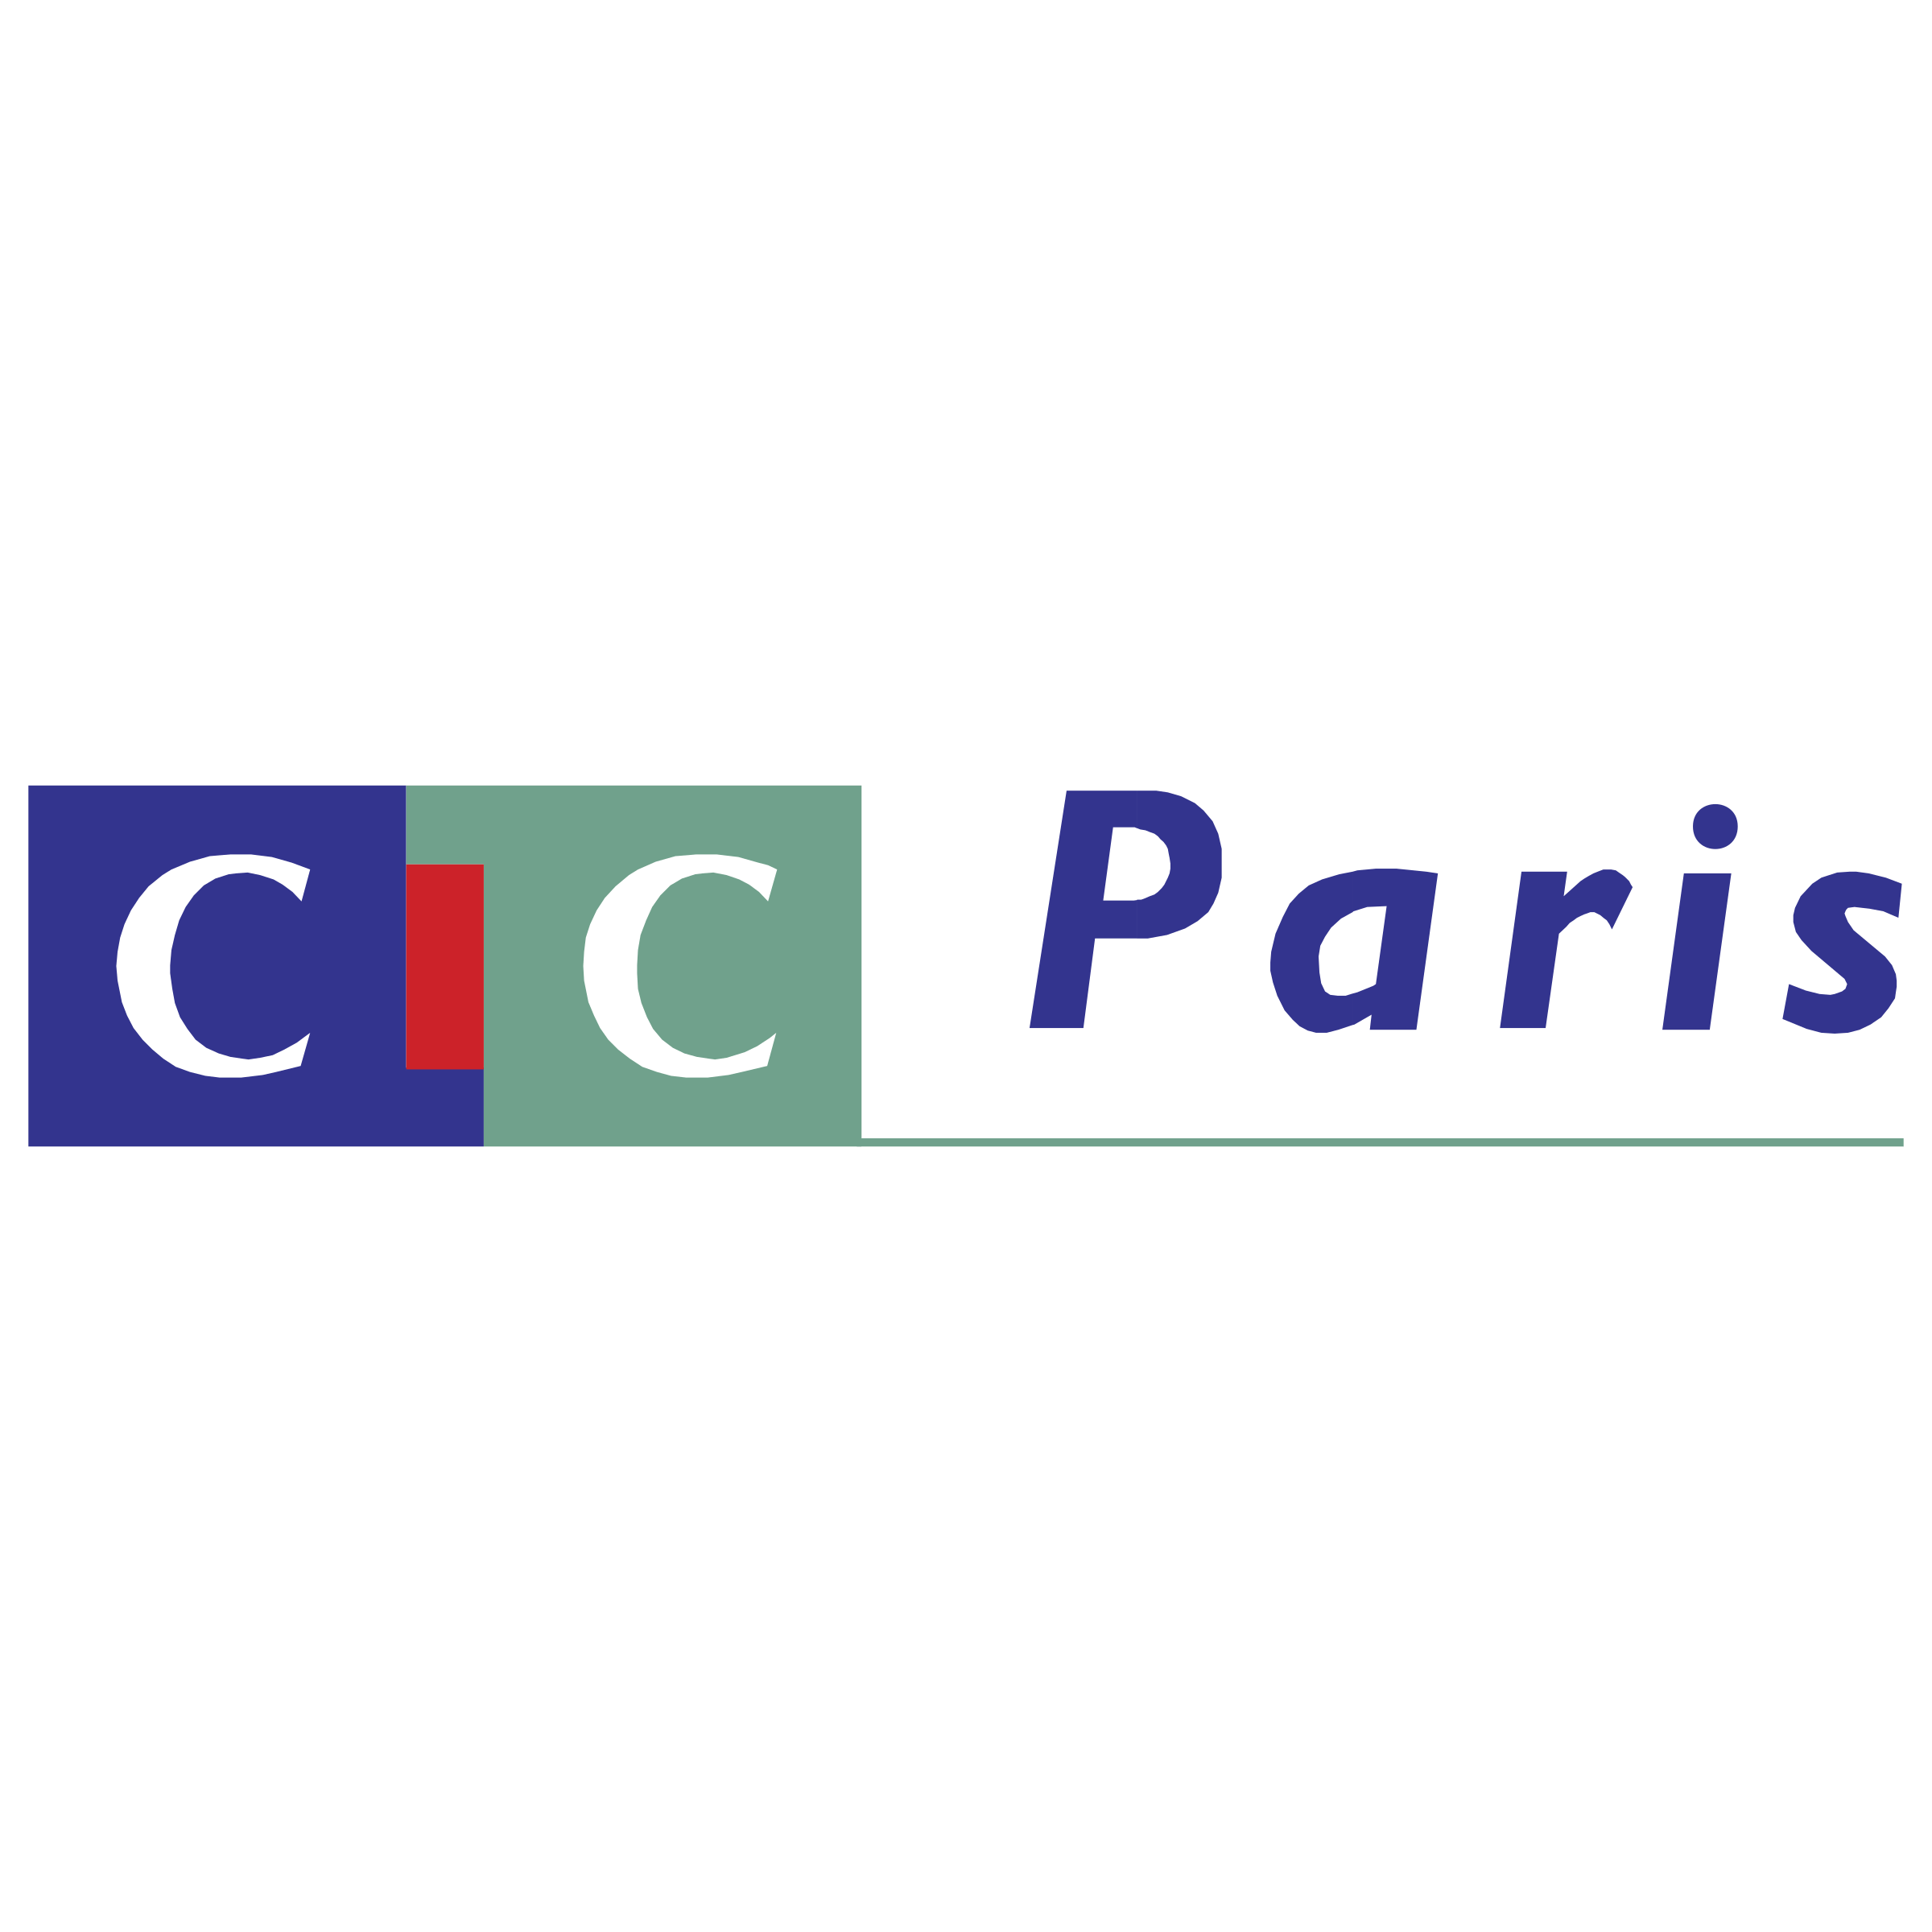 CIC Logo - CIC Paris Logo PNG Transparent & SVG Vector